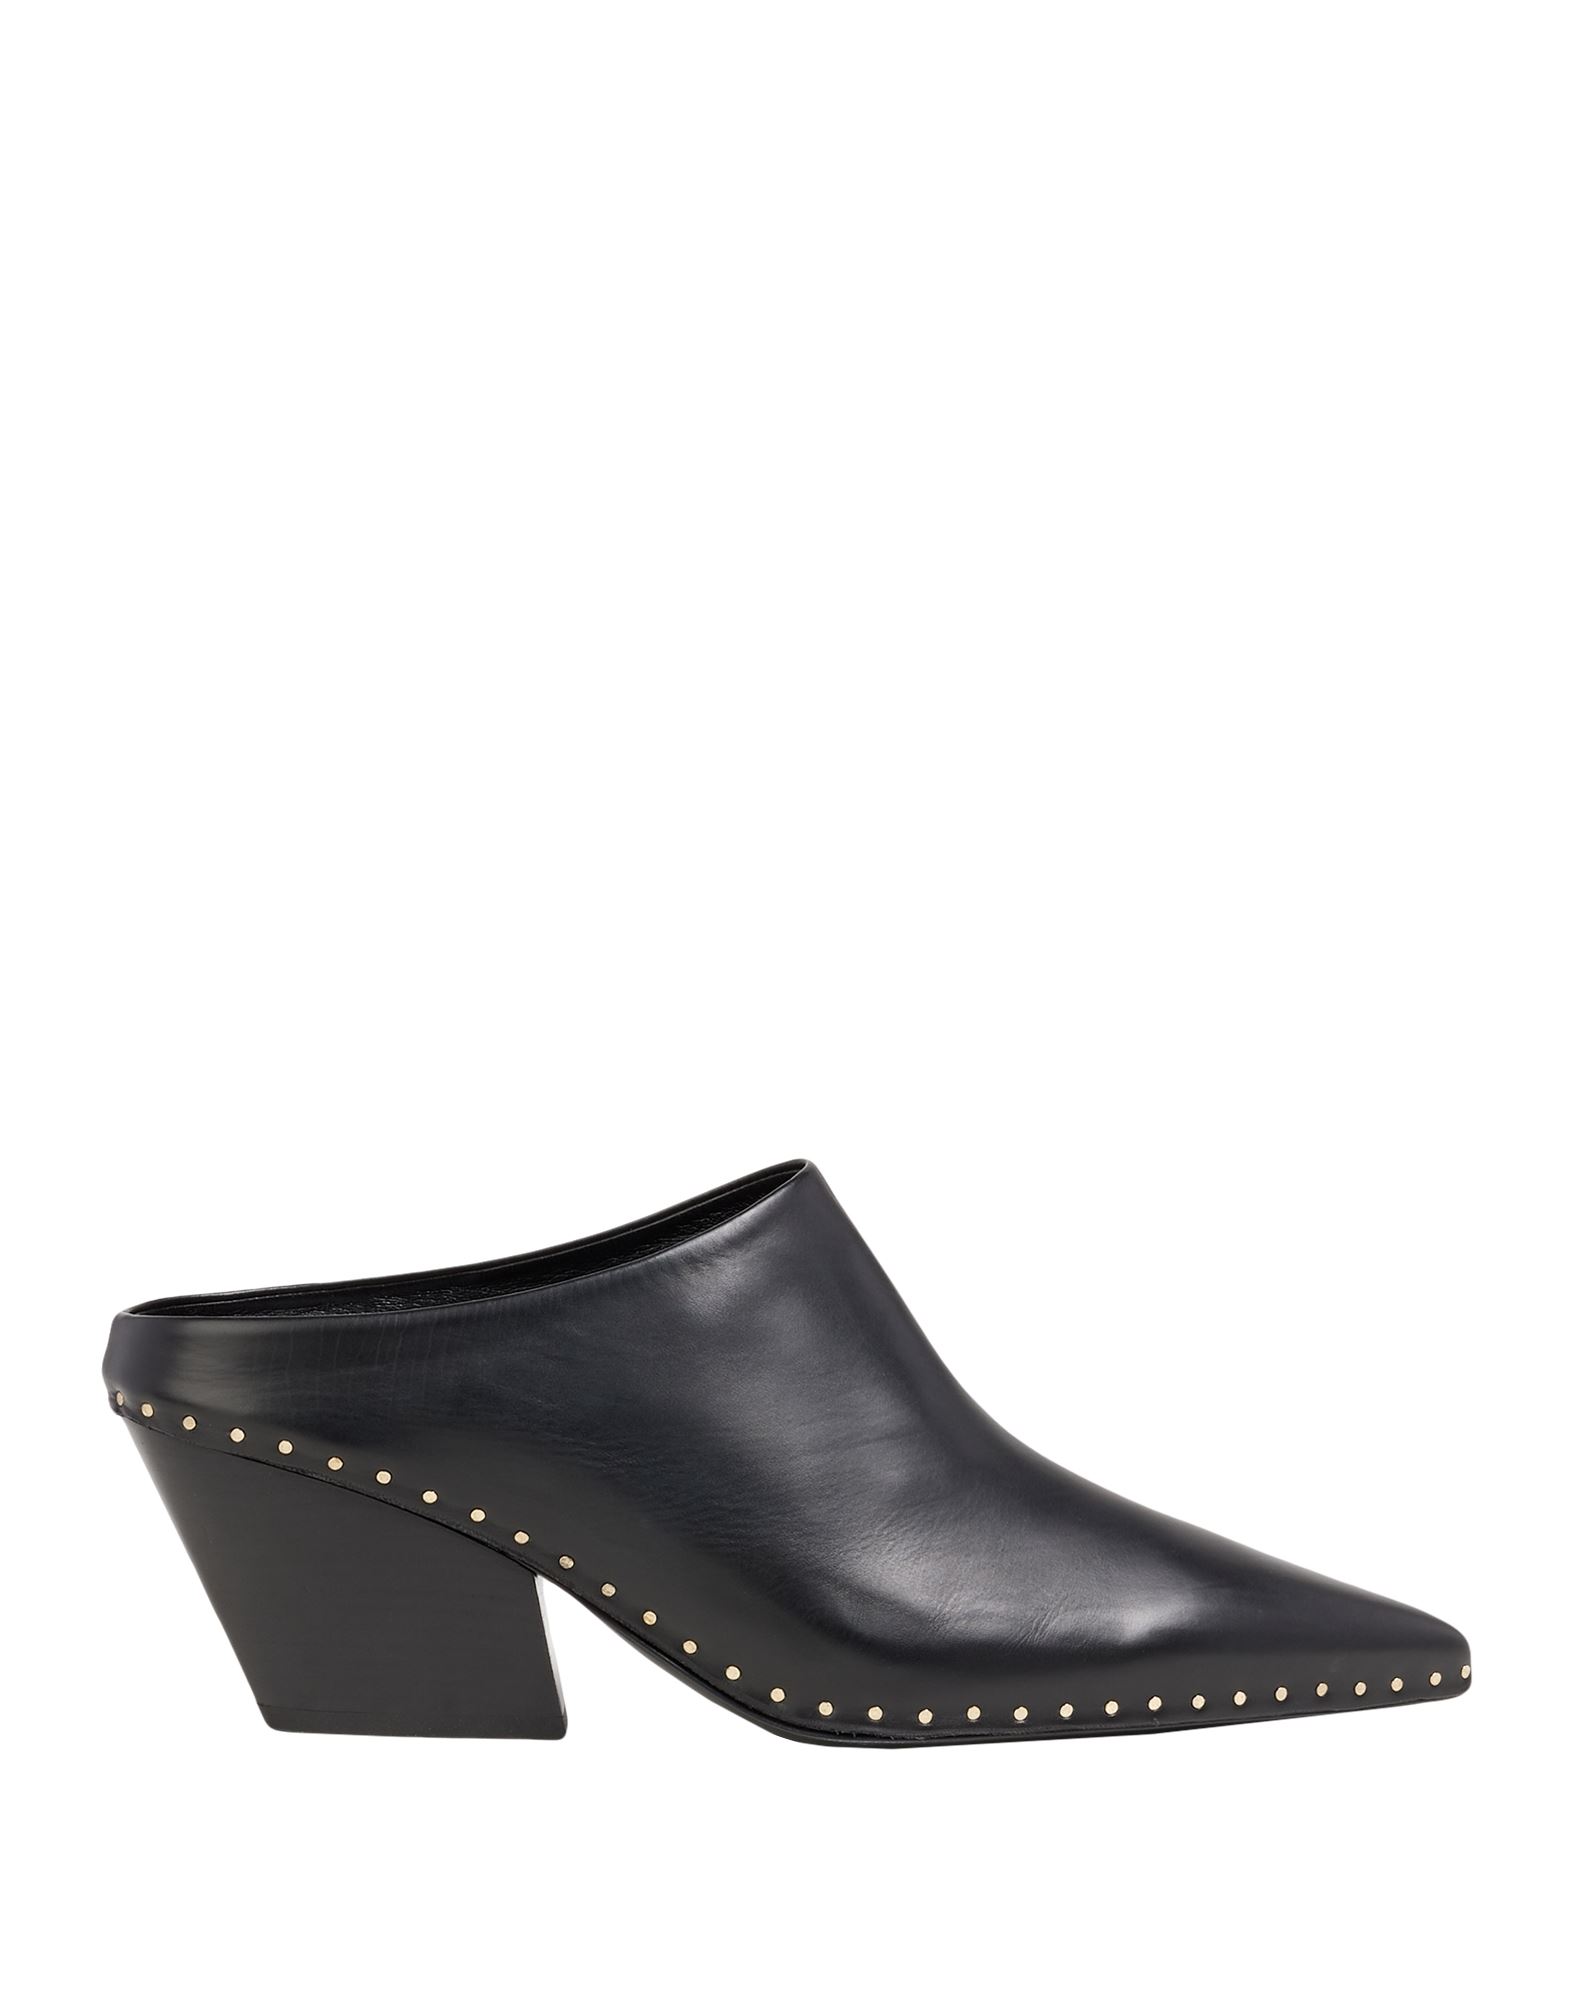 Jil Sander Woman Mules & Clogs Black Size 6 Soft Leather